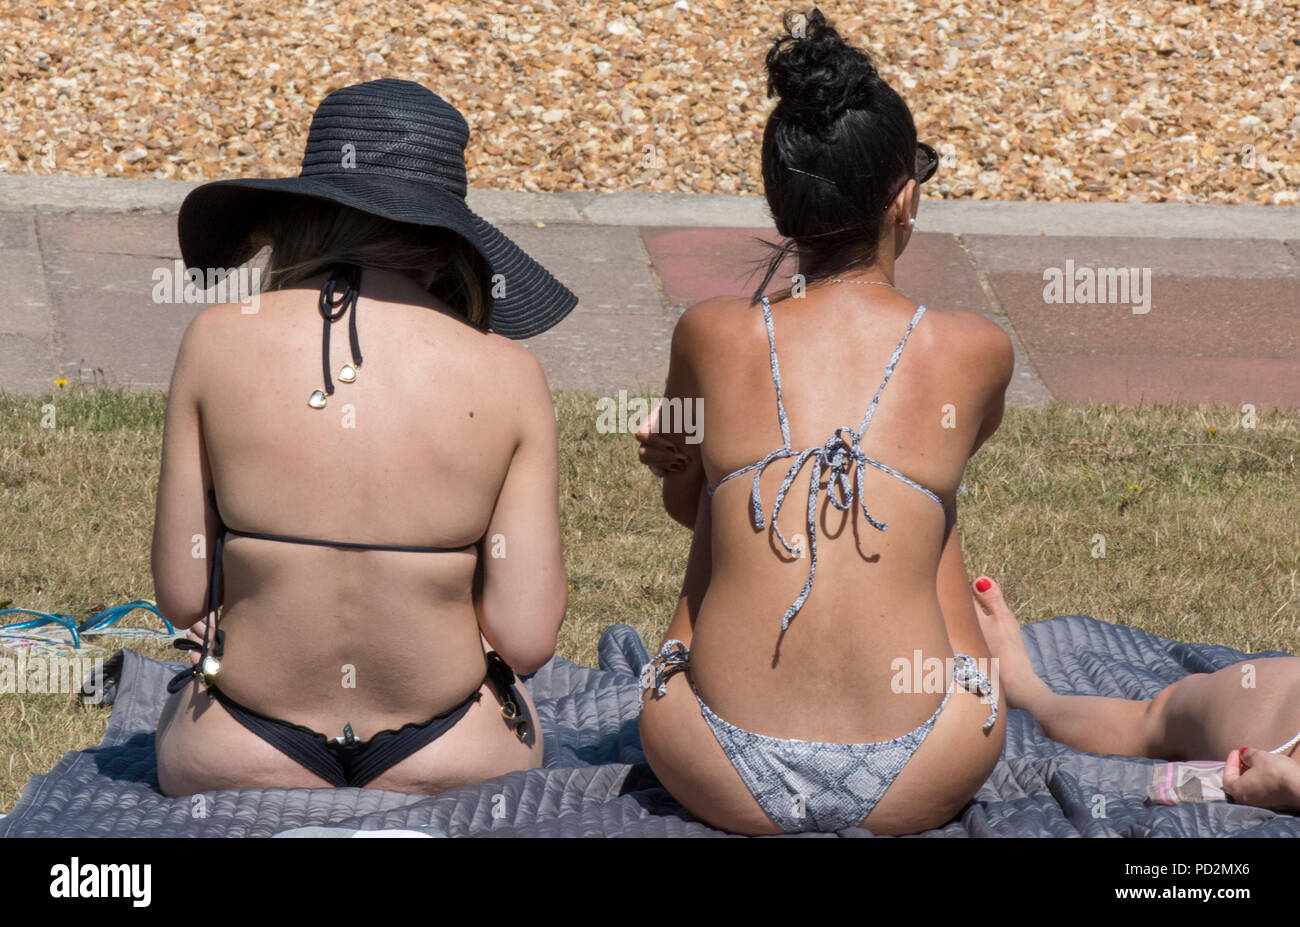 Hot Sun Bikini High Resolution Stock Photography and Images - Alamy